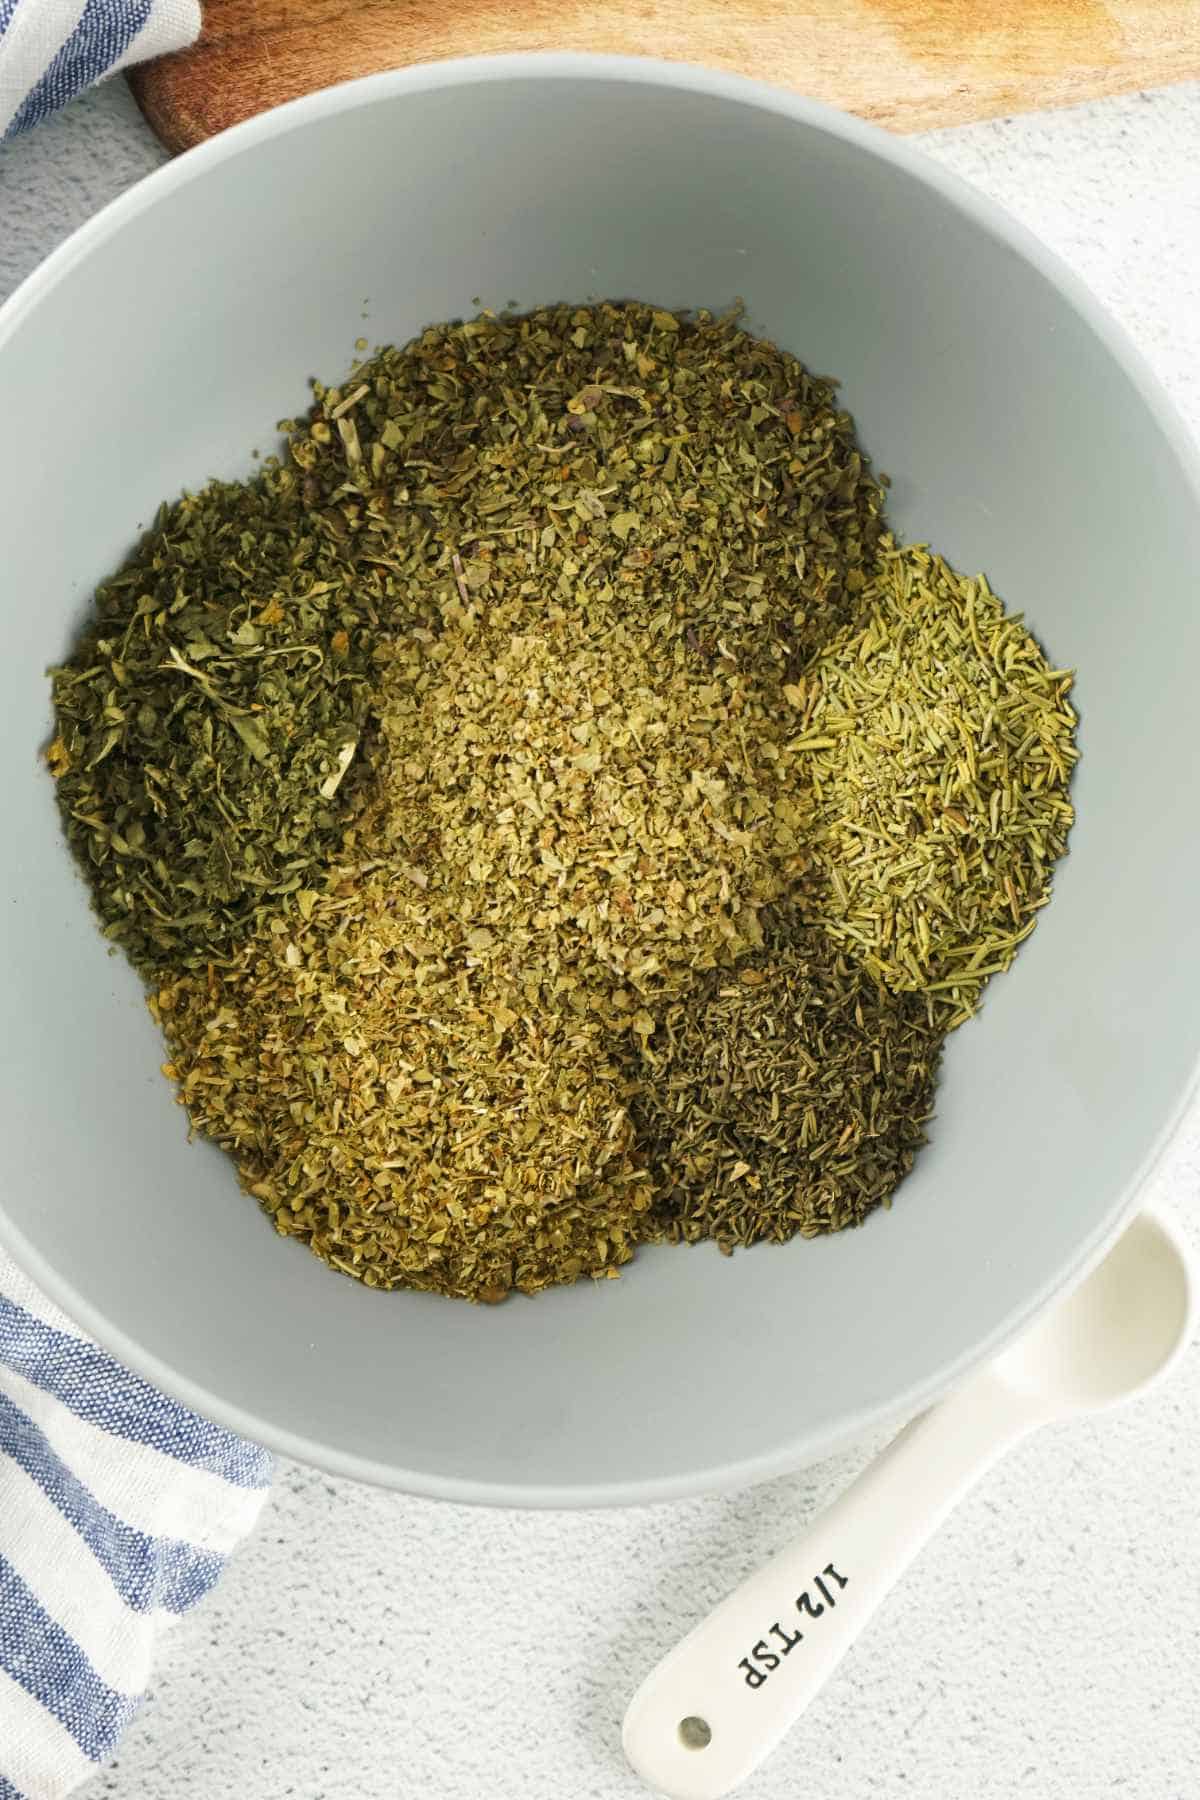 blending herbs in a bowl.